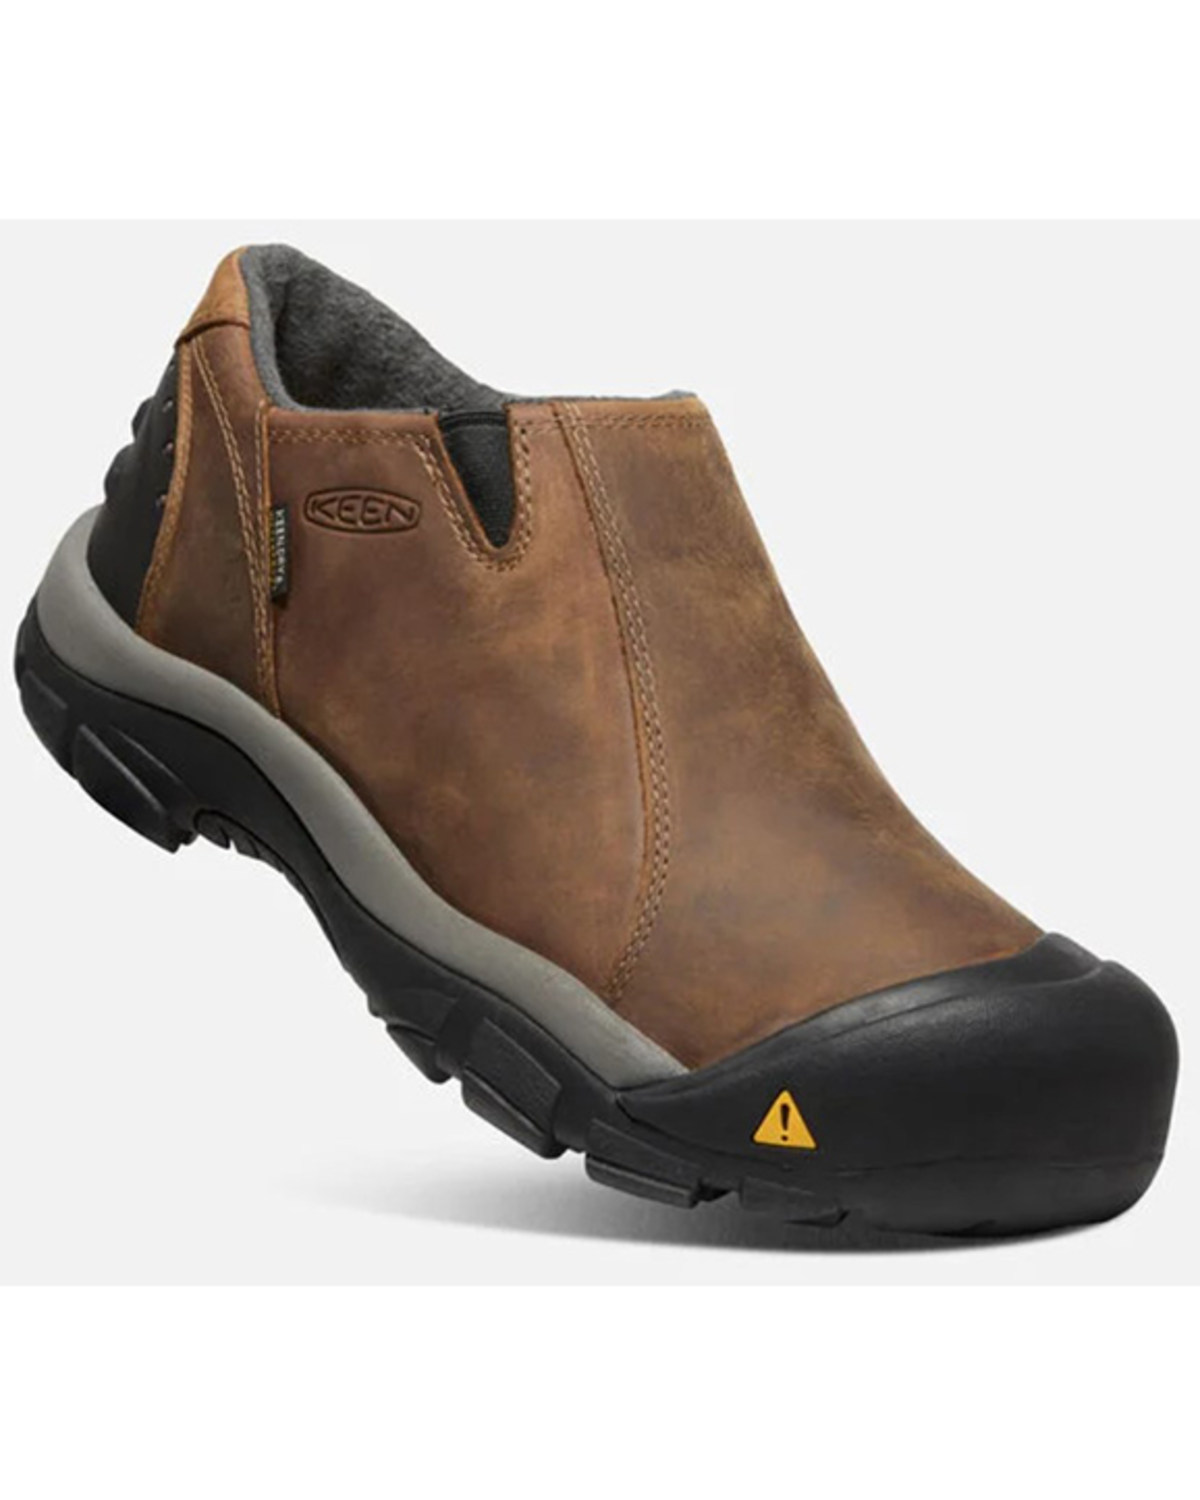 Keen Men's Brixen Low Waterproof Slip-On Insulated Work Shoes - Soft Toe